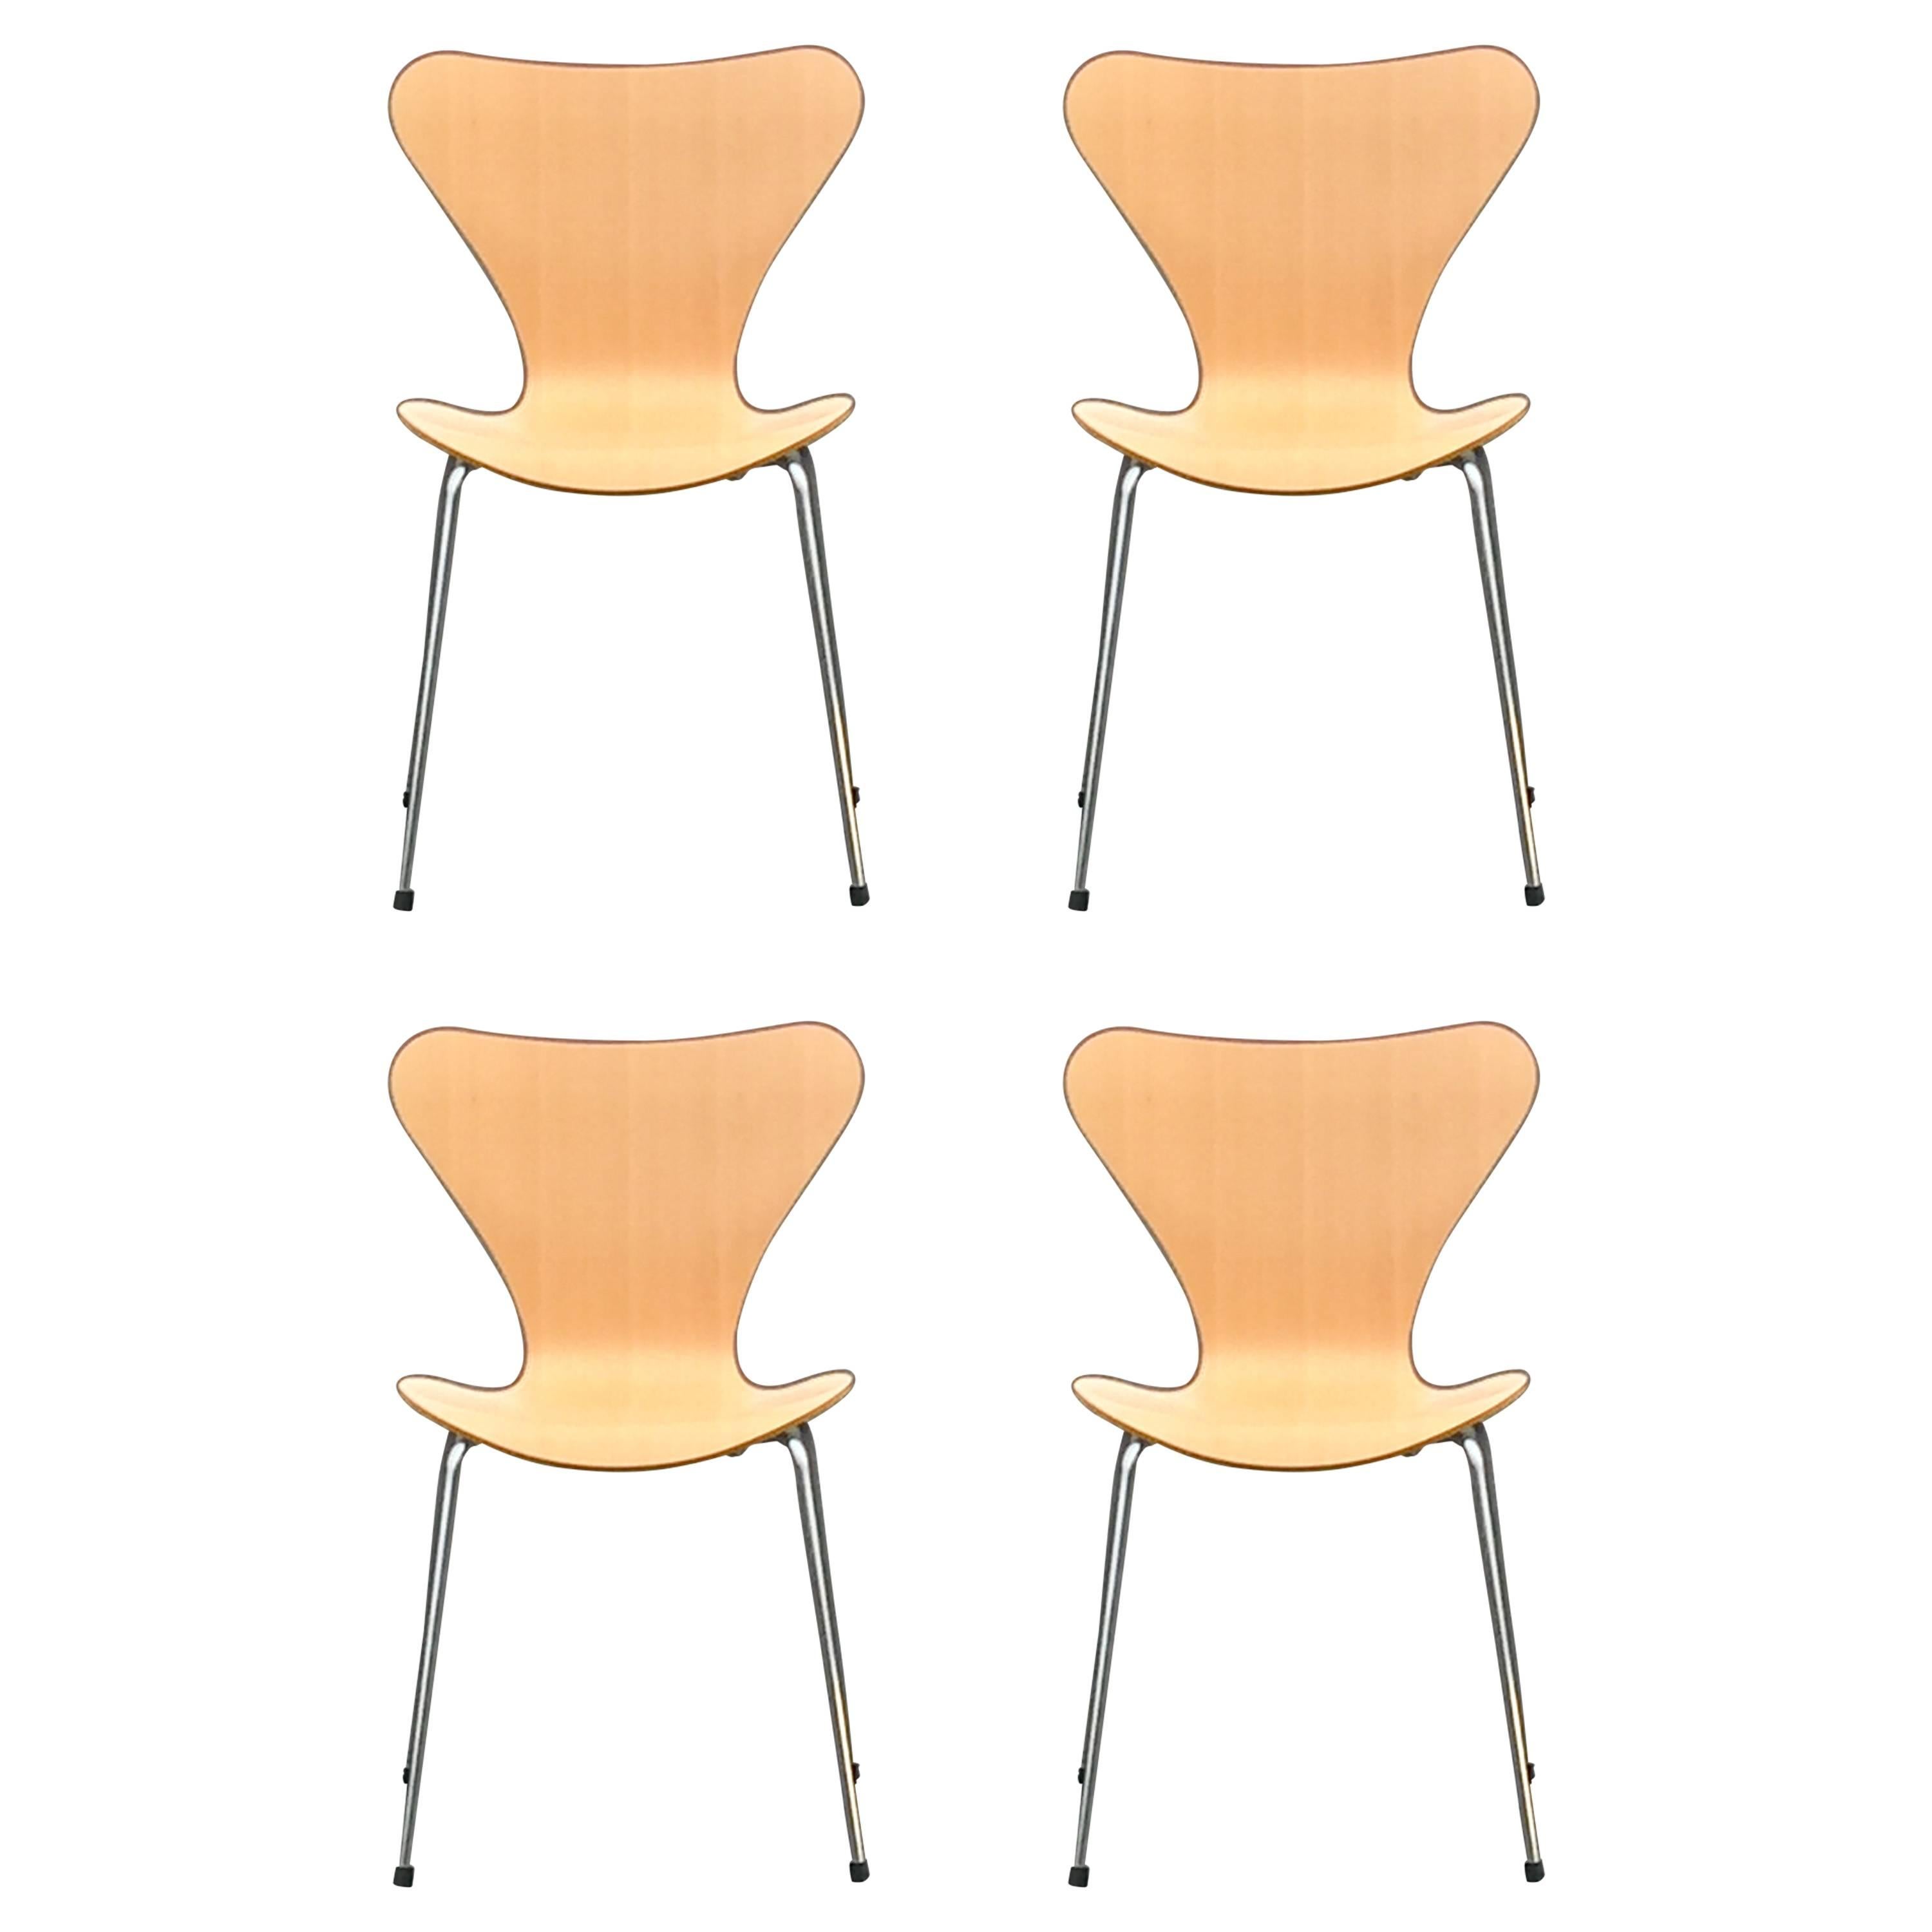  Four Stackable Arne Jacobsen for Fritz Hansen Chairs